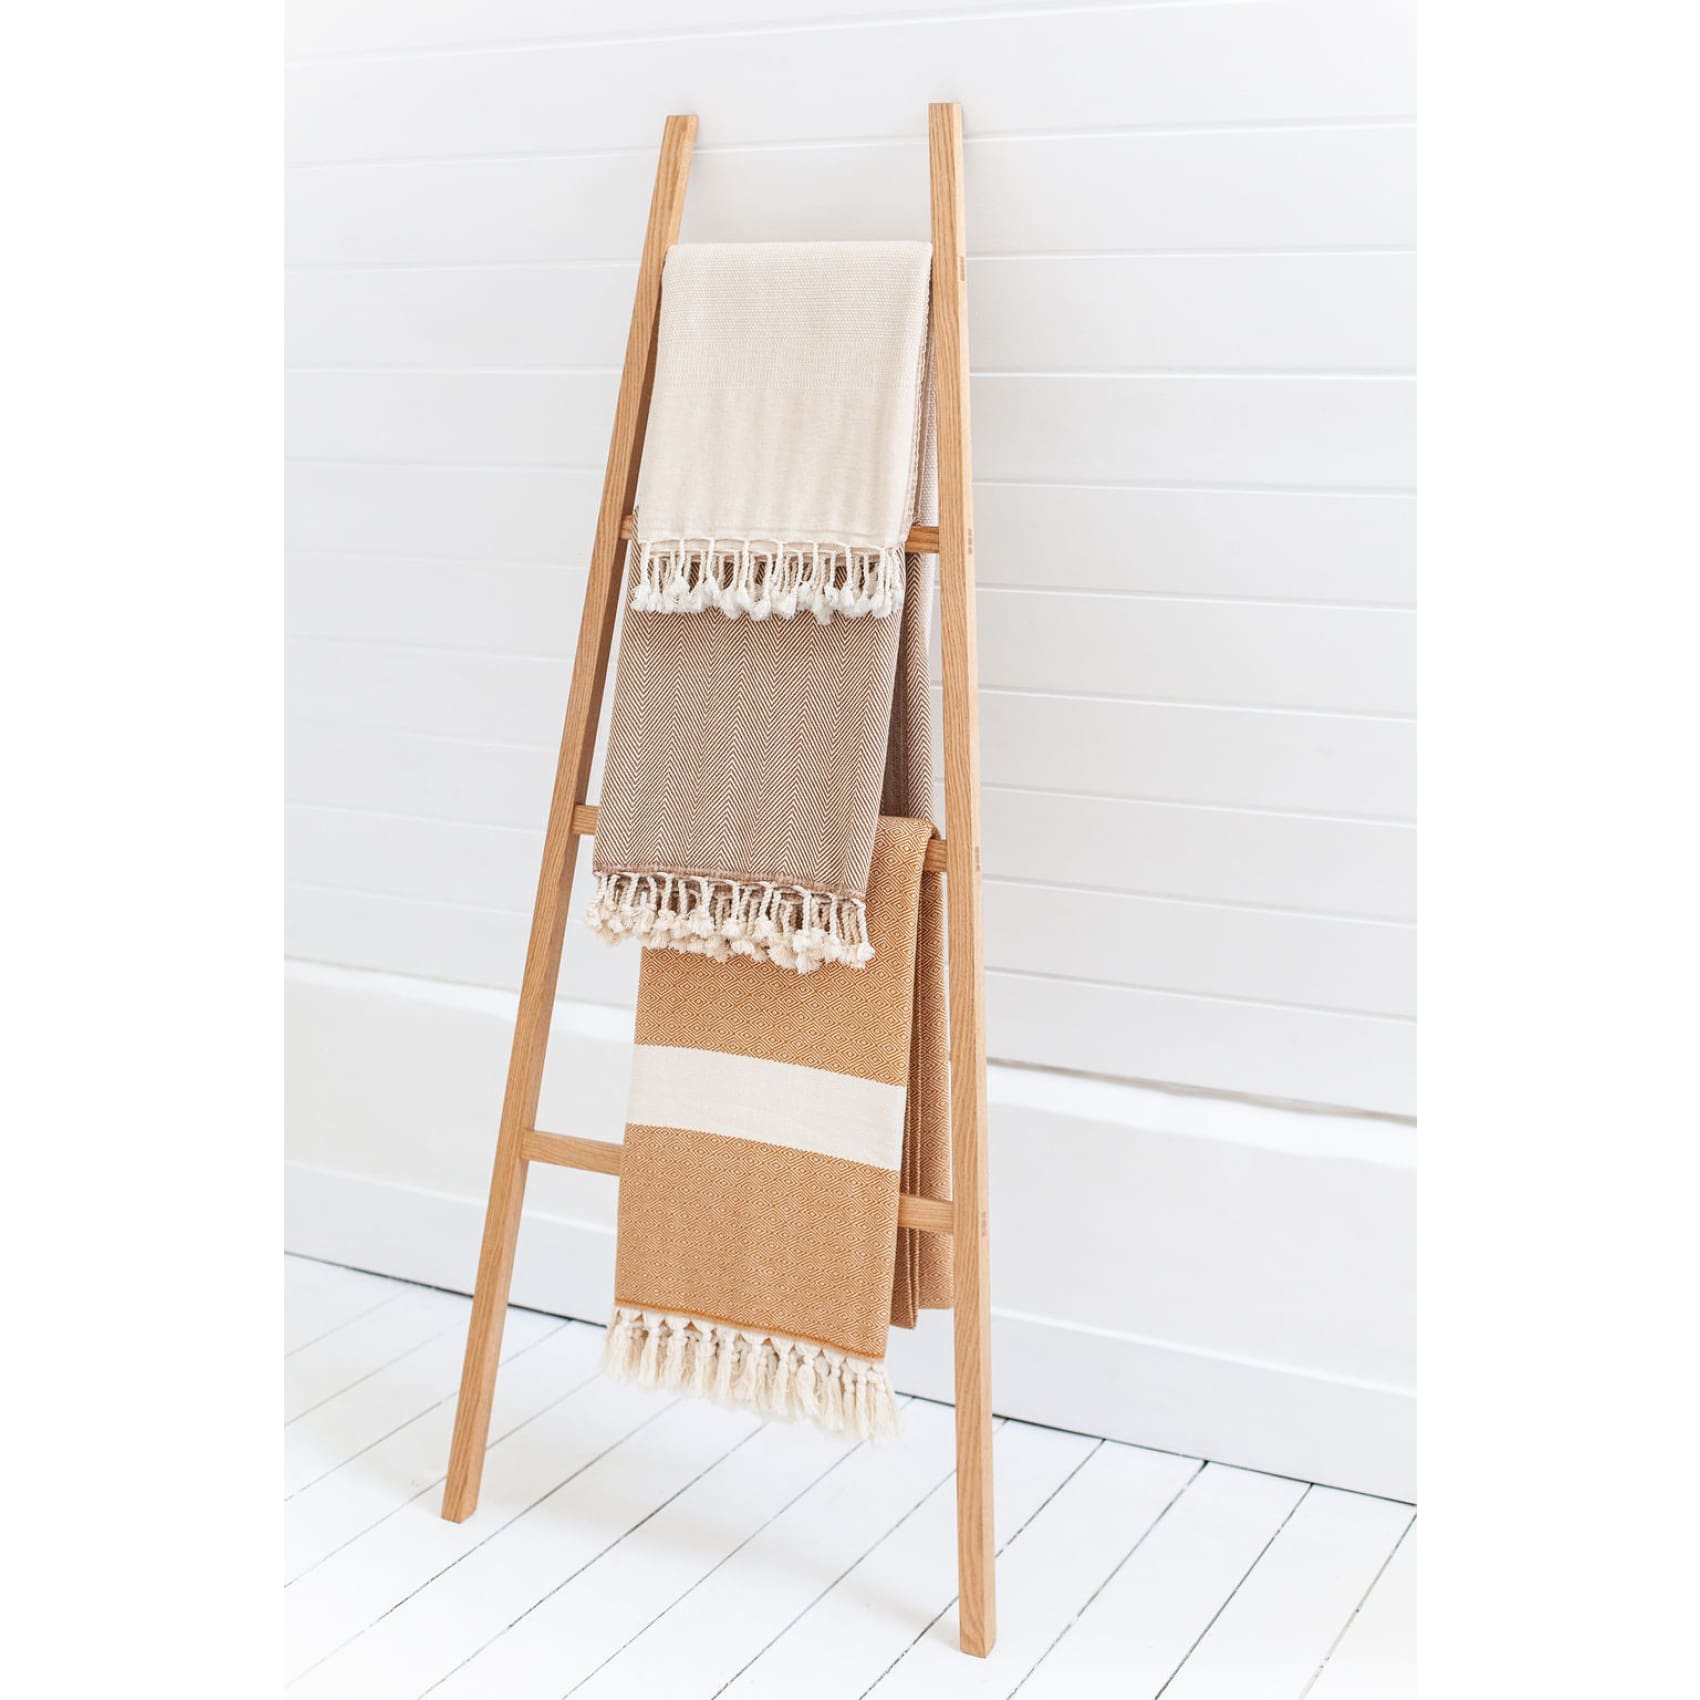 cora-firth-handmade-towel-throw-ladder-in-ash-or-oak-luks-linen-addr-369_1620845c-8c10-4389-88d6-417ca976b38e.jpg